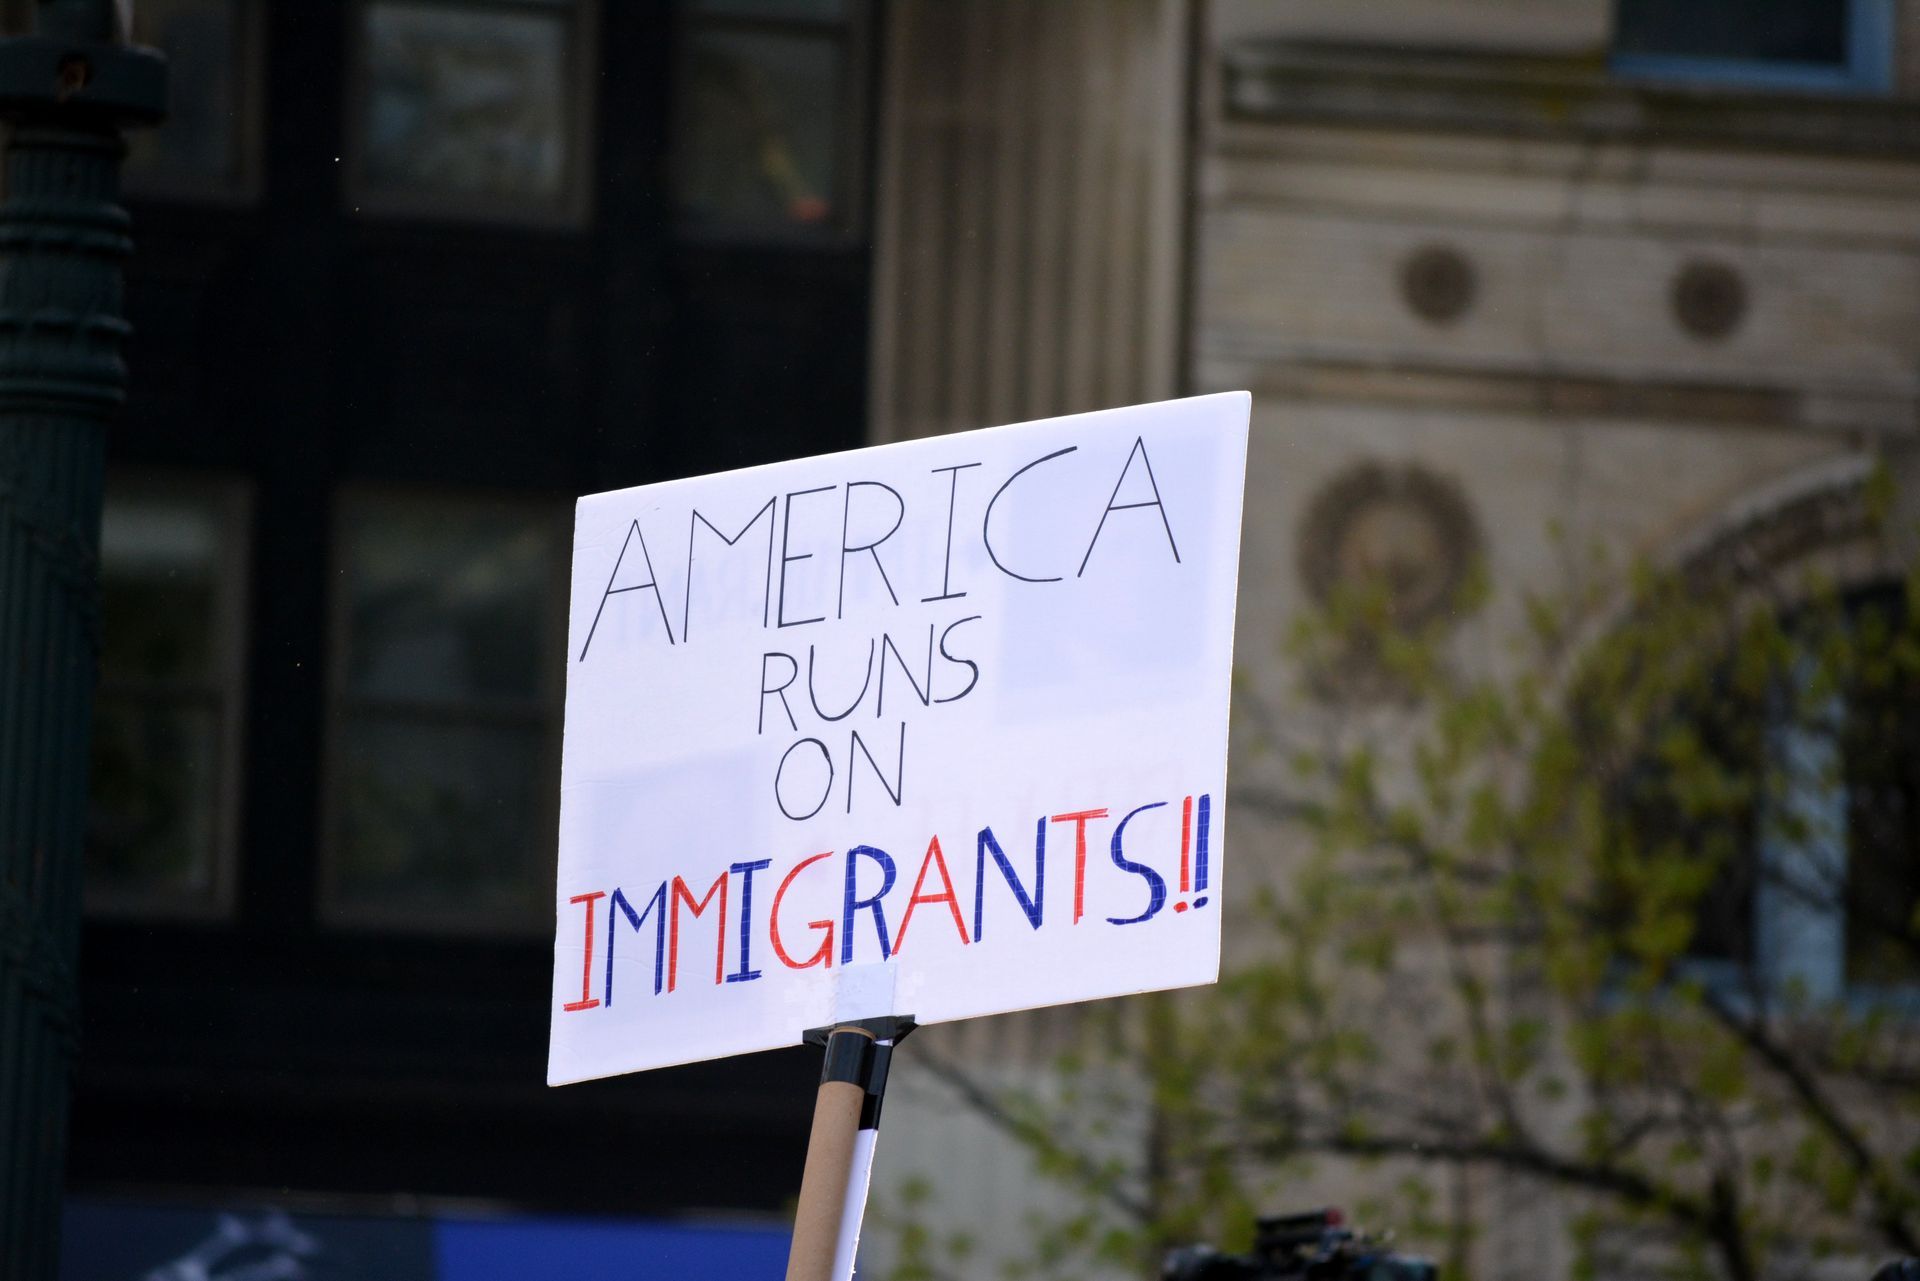 America runs on immigrants